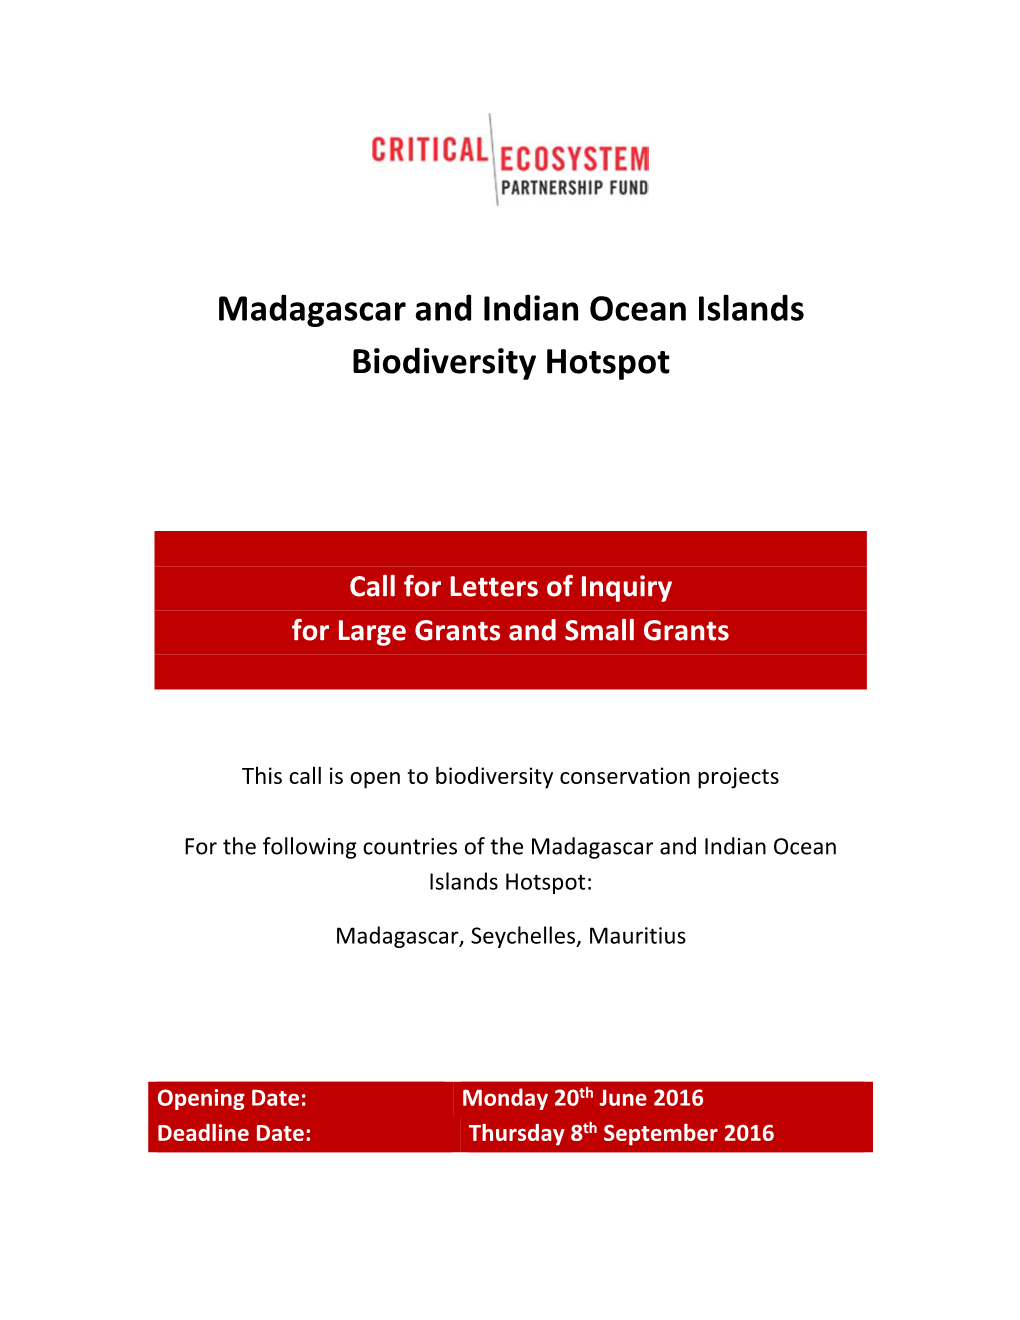 Madagascar and Indian Ocean Islands Biodiversity Hotspot